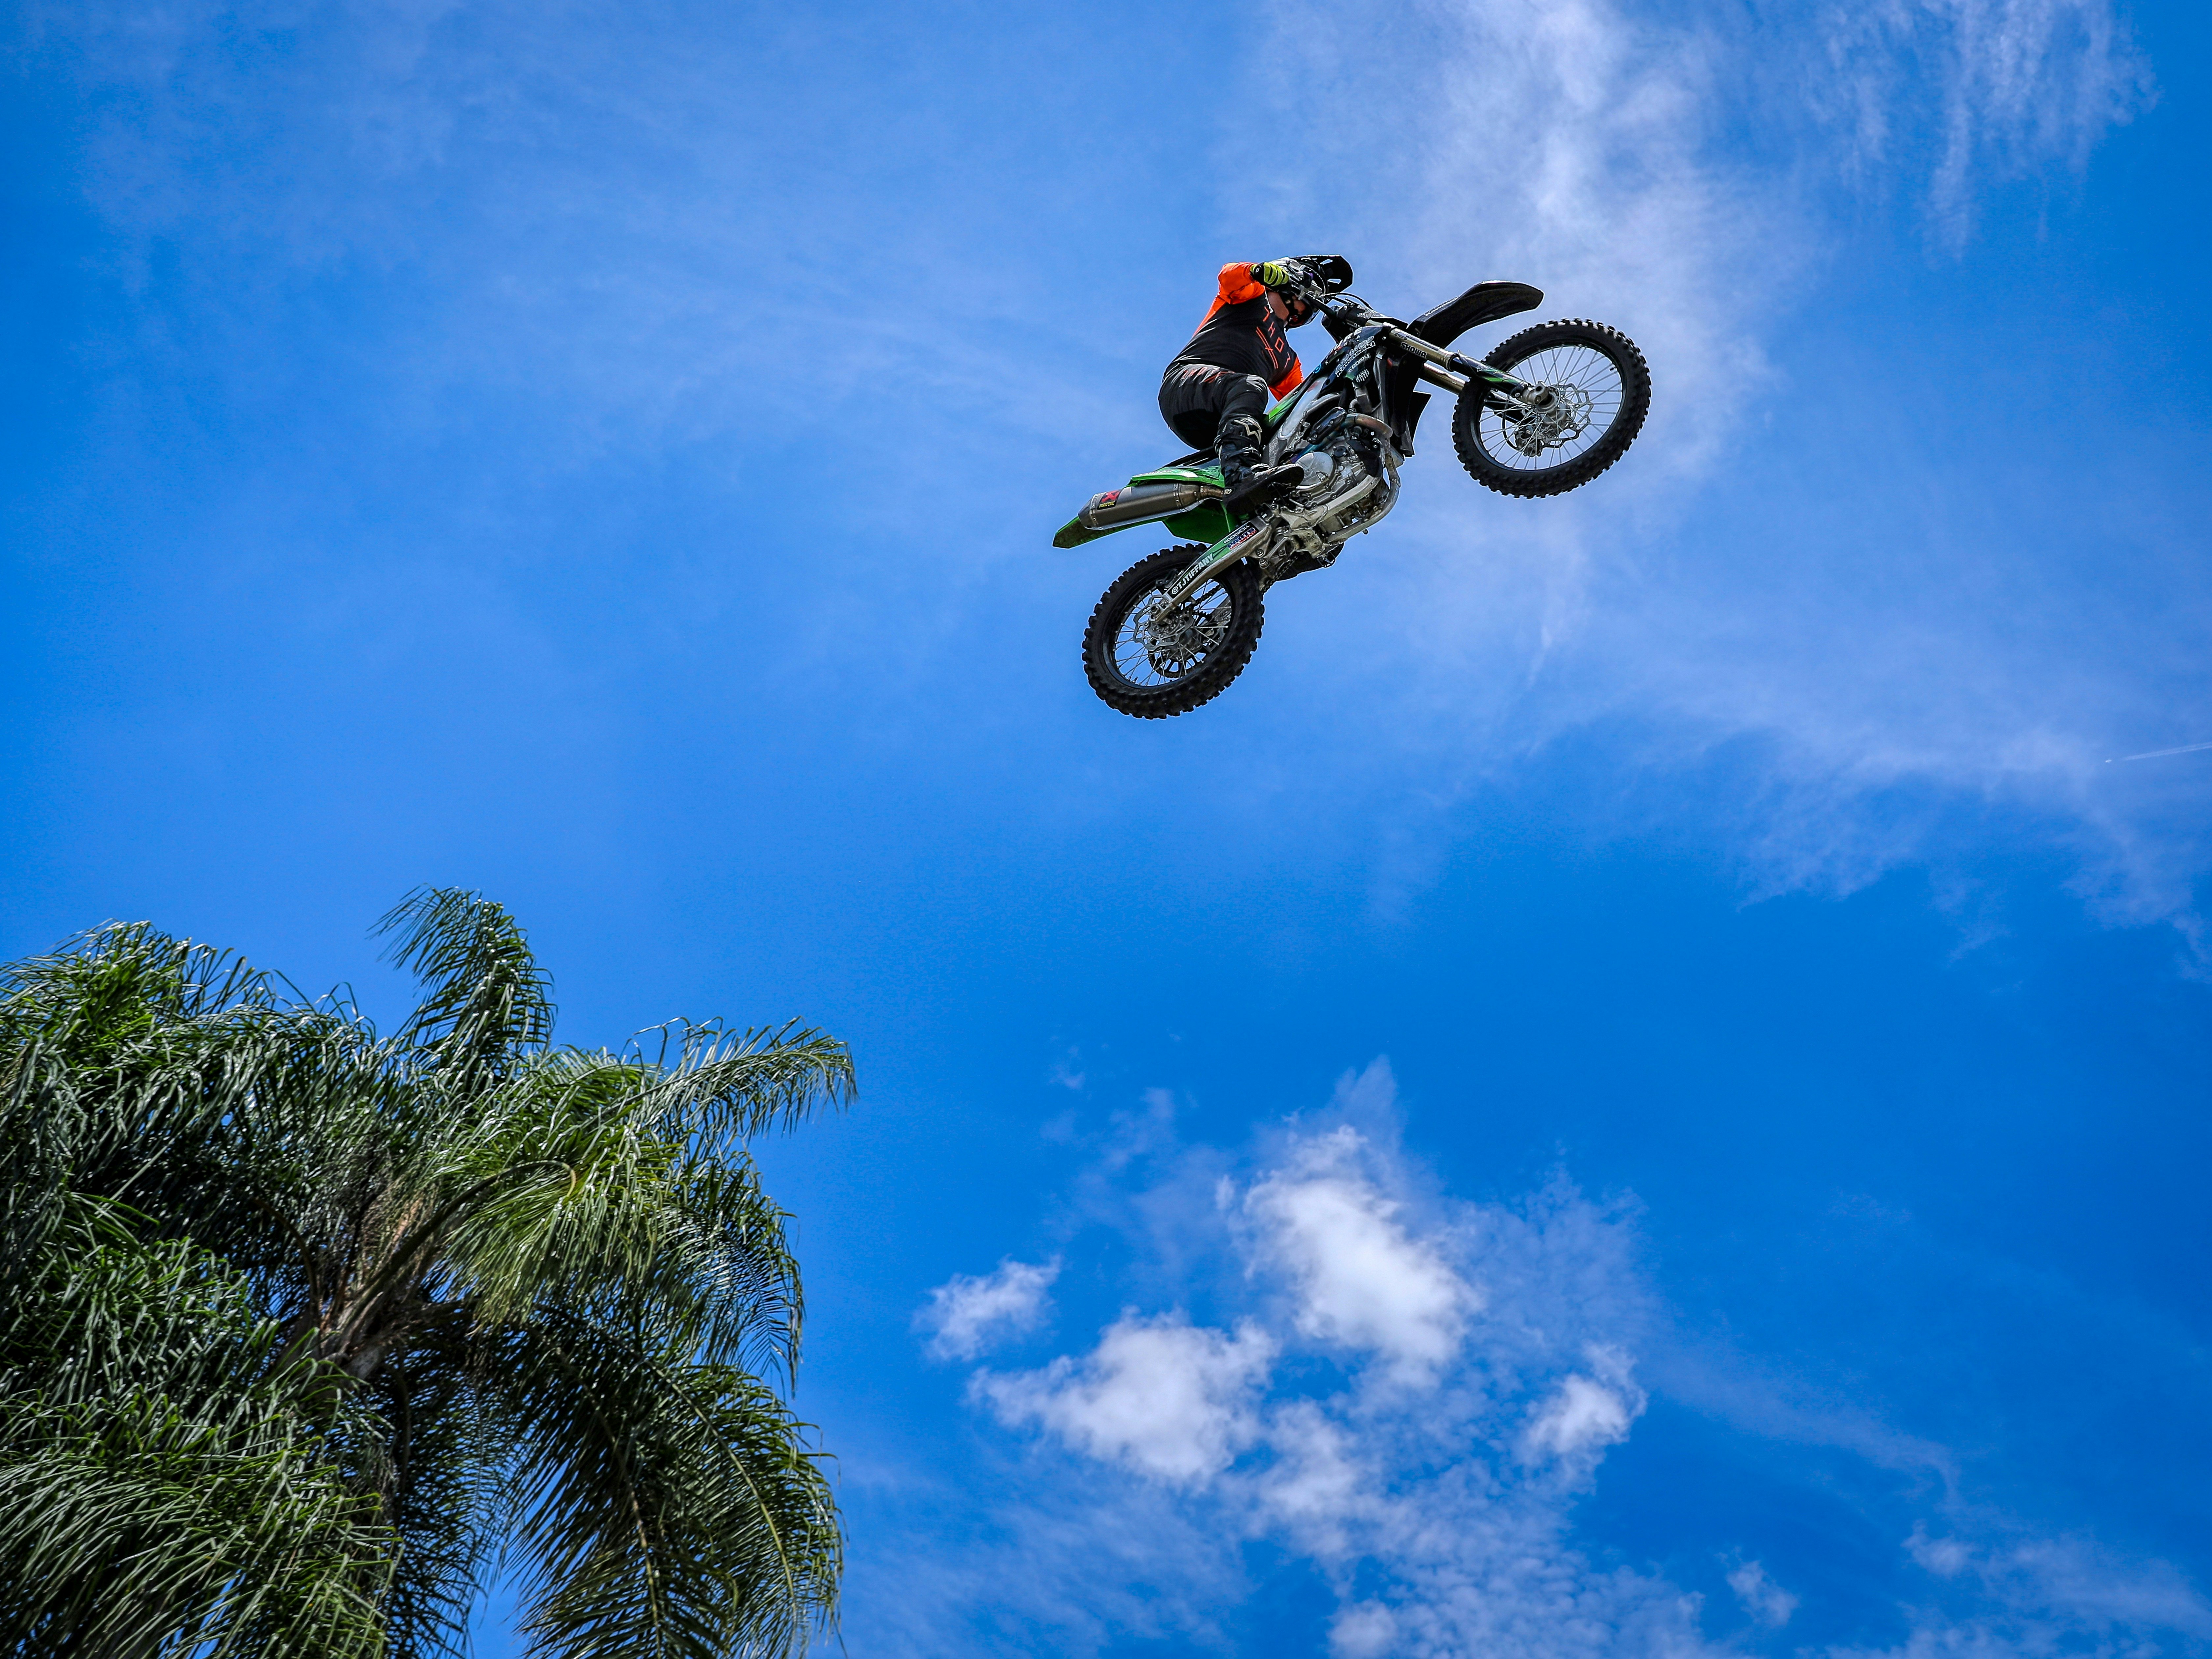 man riding motocross dirt bike under blue sky during daytime